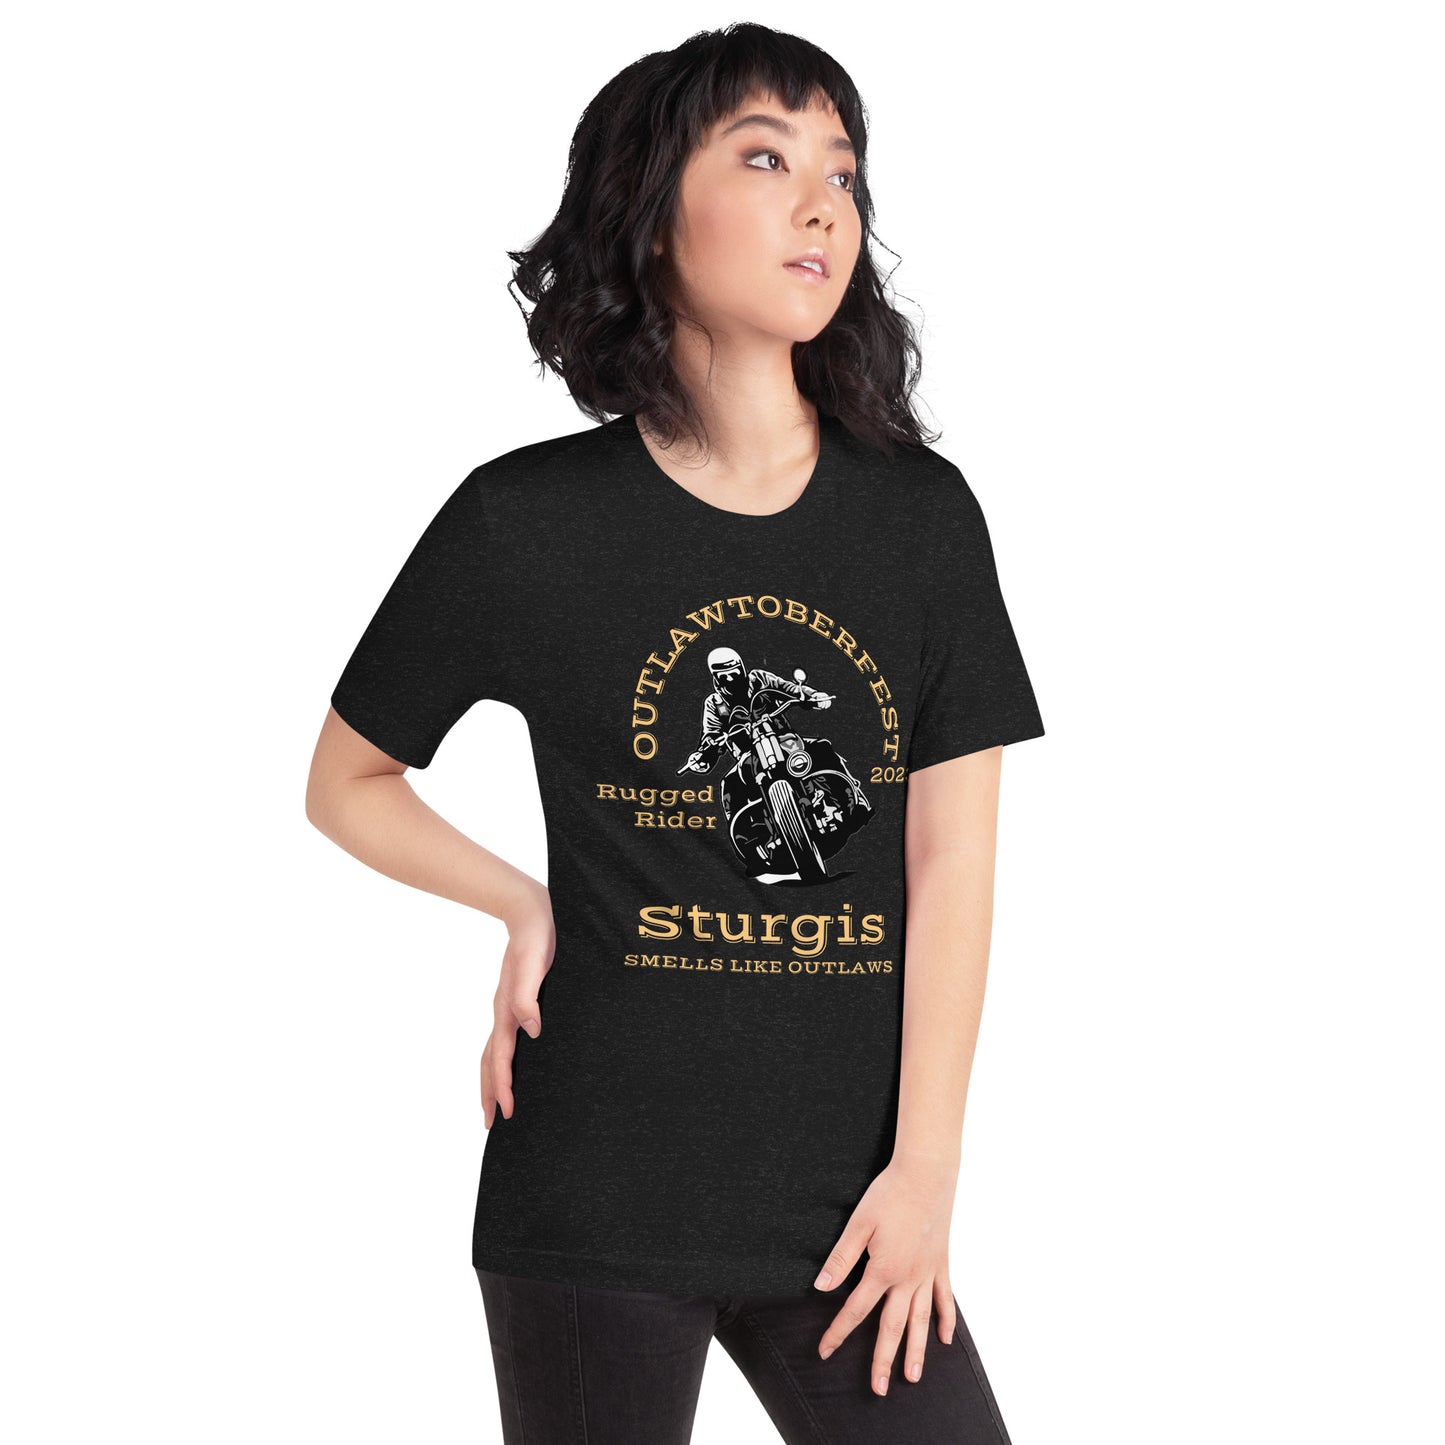 Sturgis T-Shirt - Outlawtoberfest 2023 - Smells like Outlaws Tour T-Shirt